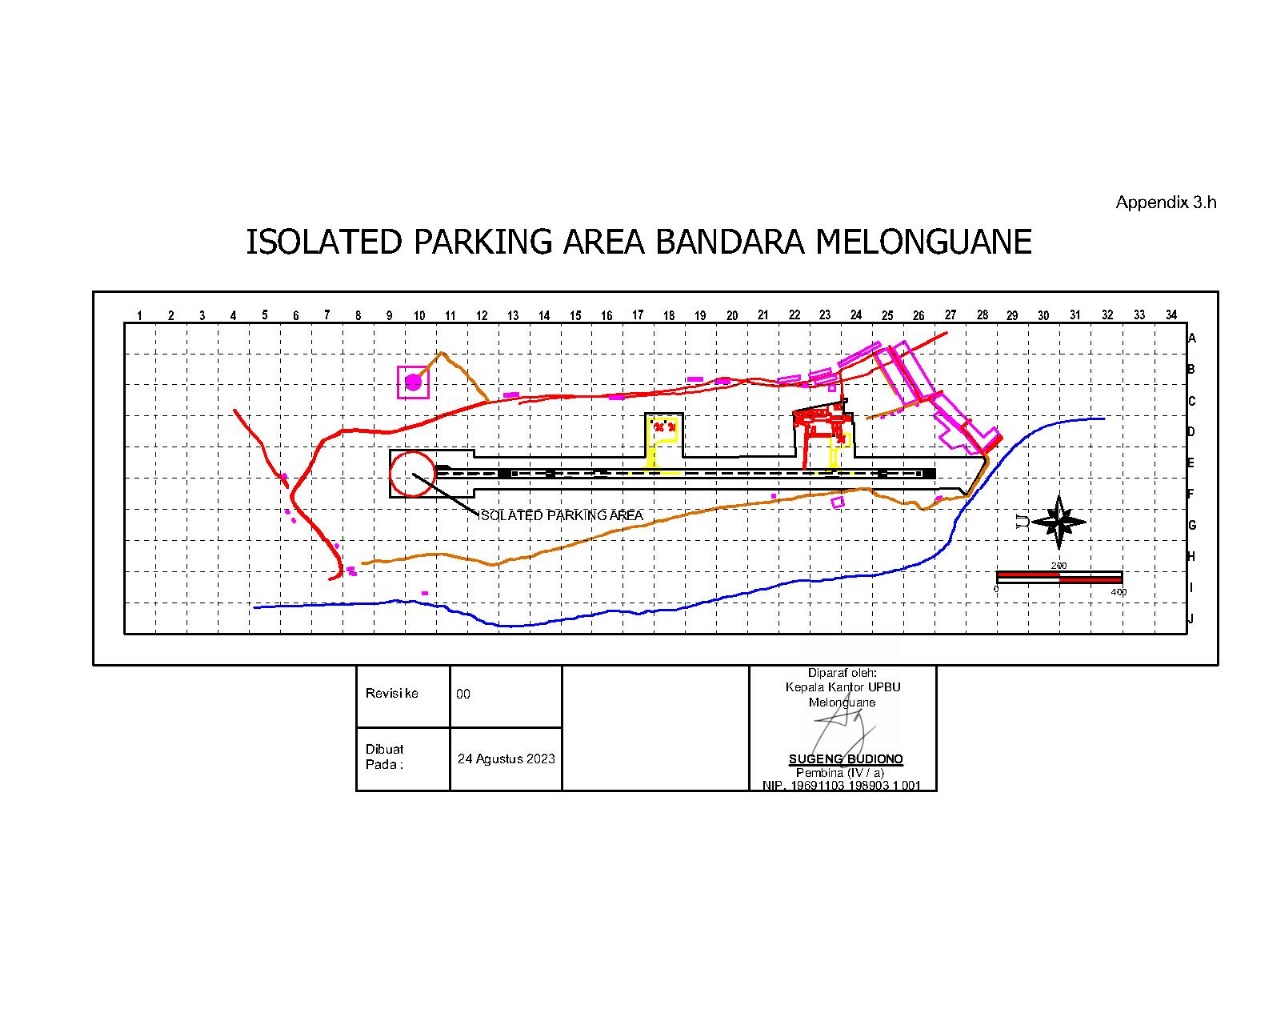 Gambar Peta Bandara Isolated Parking Area_Bandara Melonguane